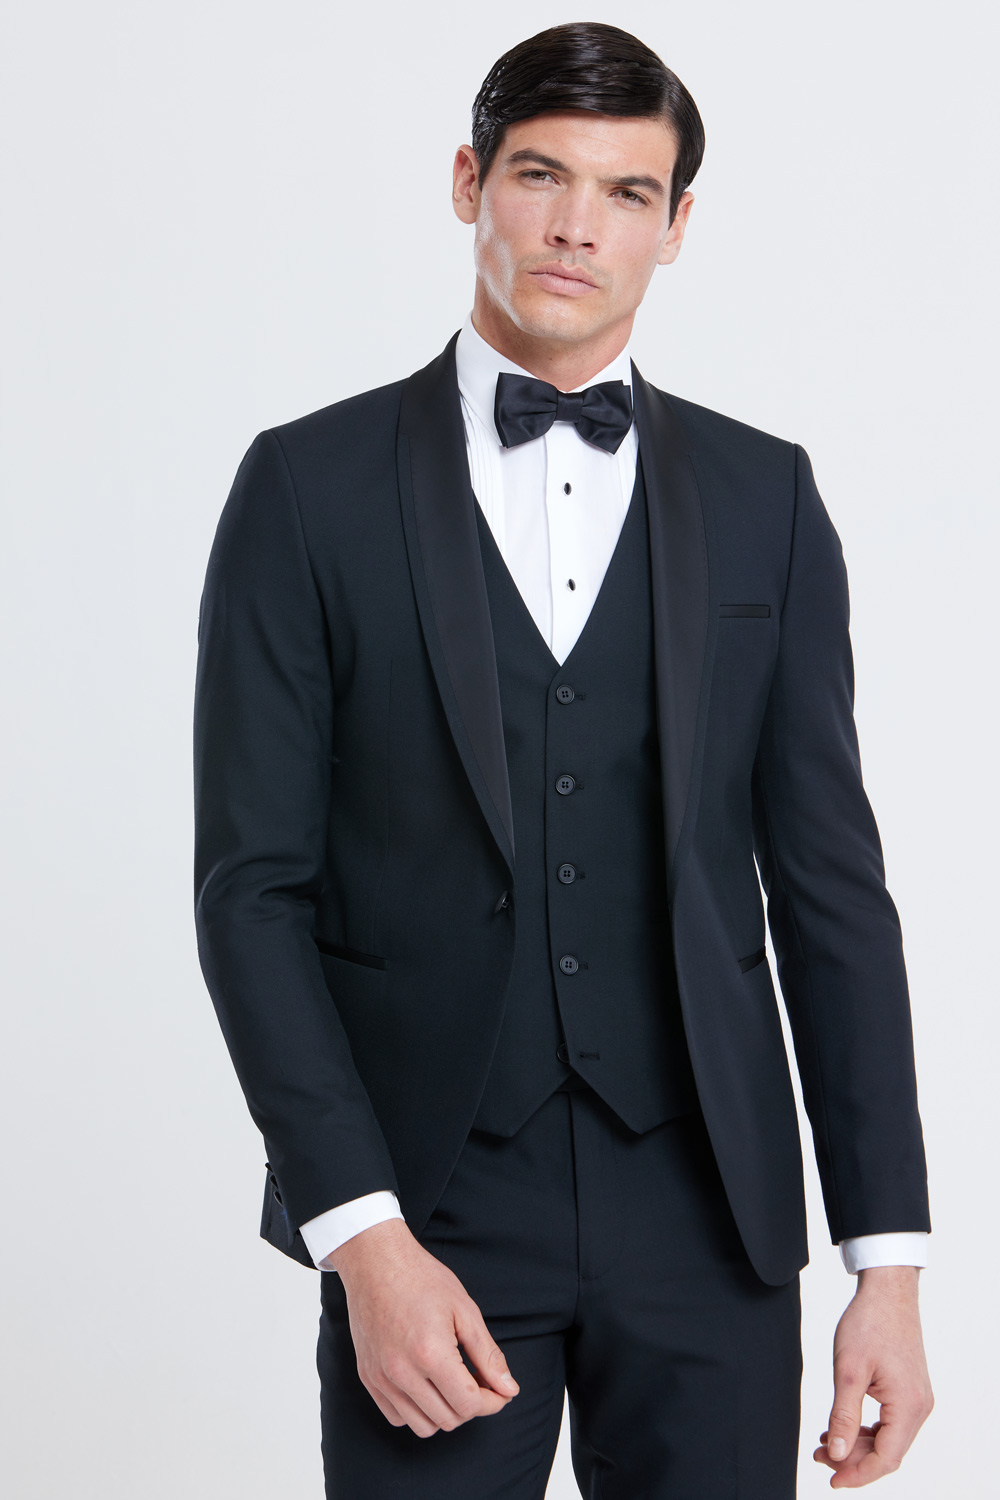 Black Shawl Collar Tuxedo - Tom Murphy's Formal and Menswear